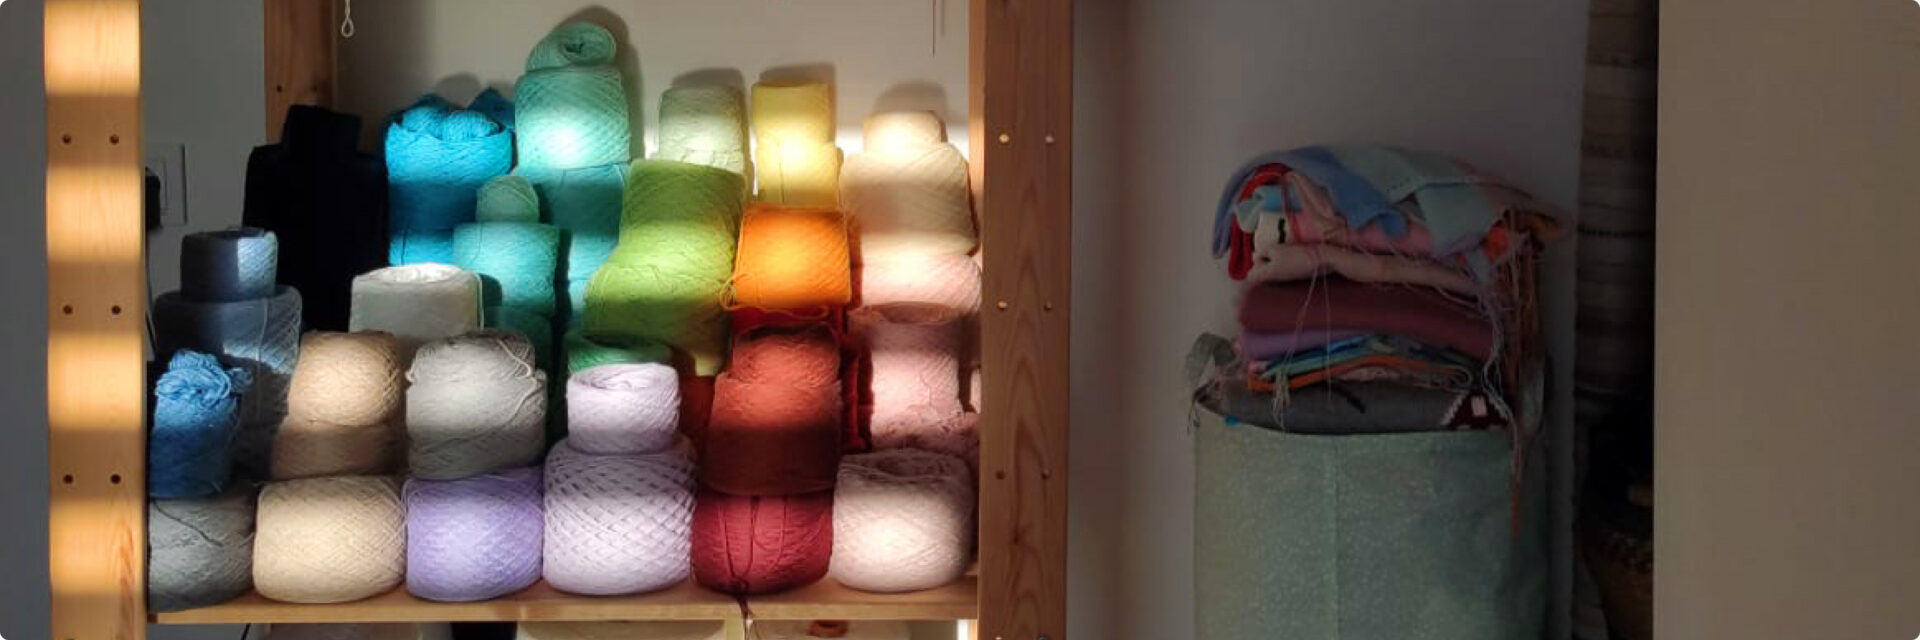 A colourful yarn stock on a shelf, setting sun leaks through the windows and lights the seen.